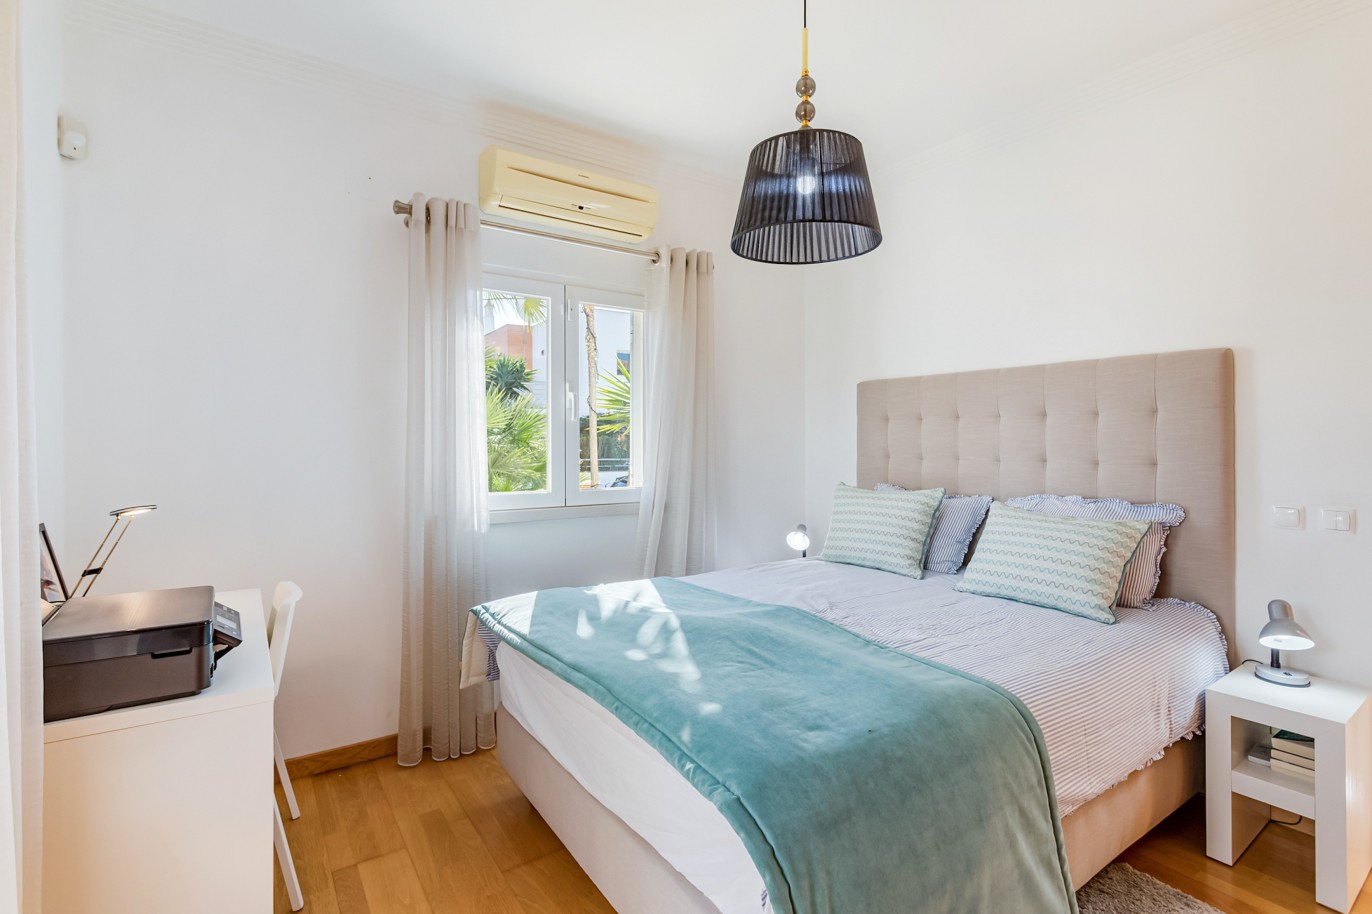 4 bedroom detached villa with pool for sale in Albufeira, Algarve_214361